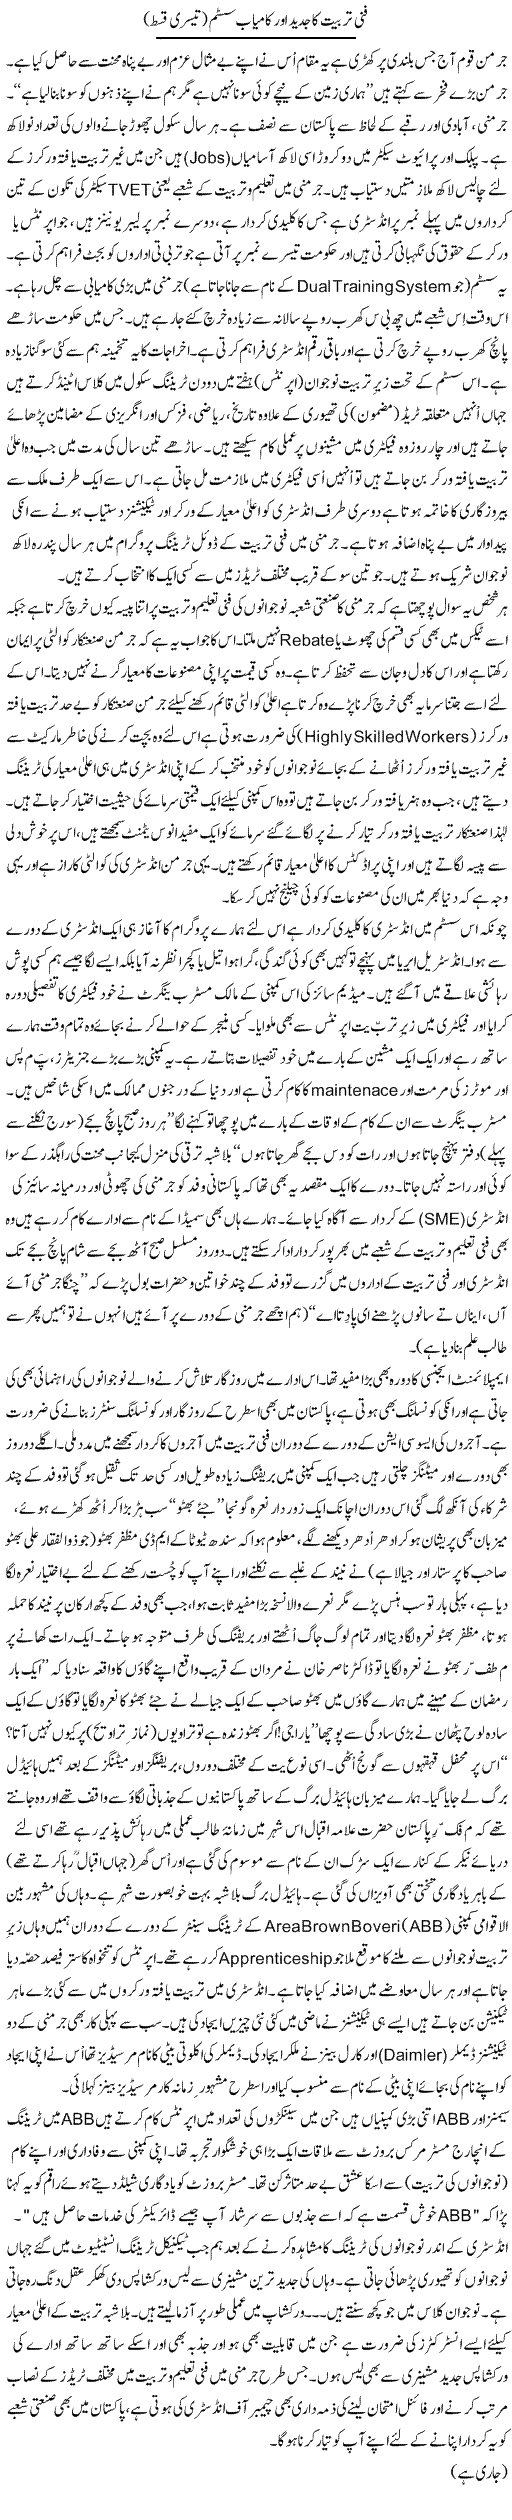 Fanni Tarbiyat Ka Jadeed Aur Kamyaab System (3) | Zulfiqar Ahmed Cheema | Daily Urdu Columns